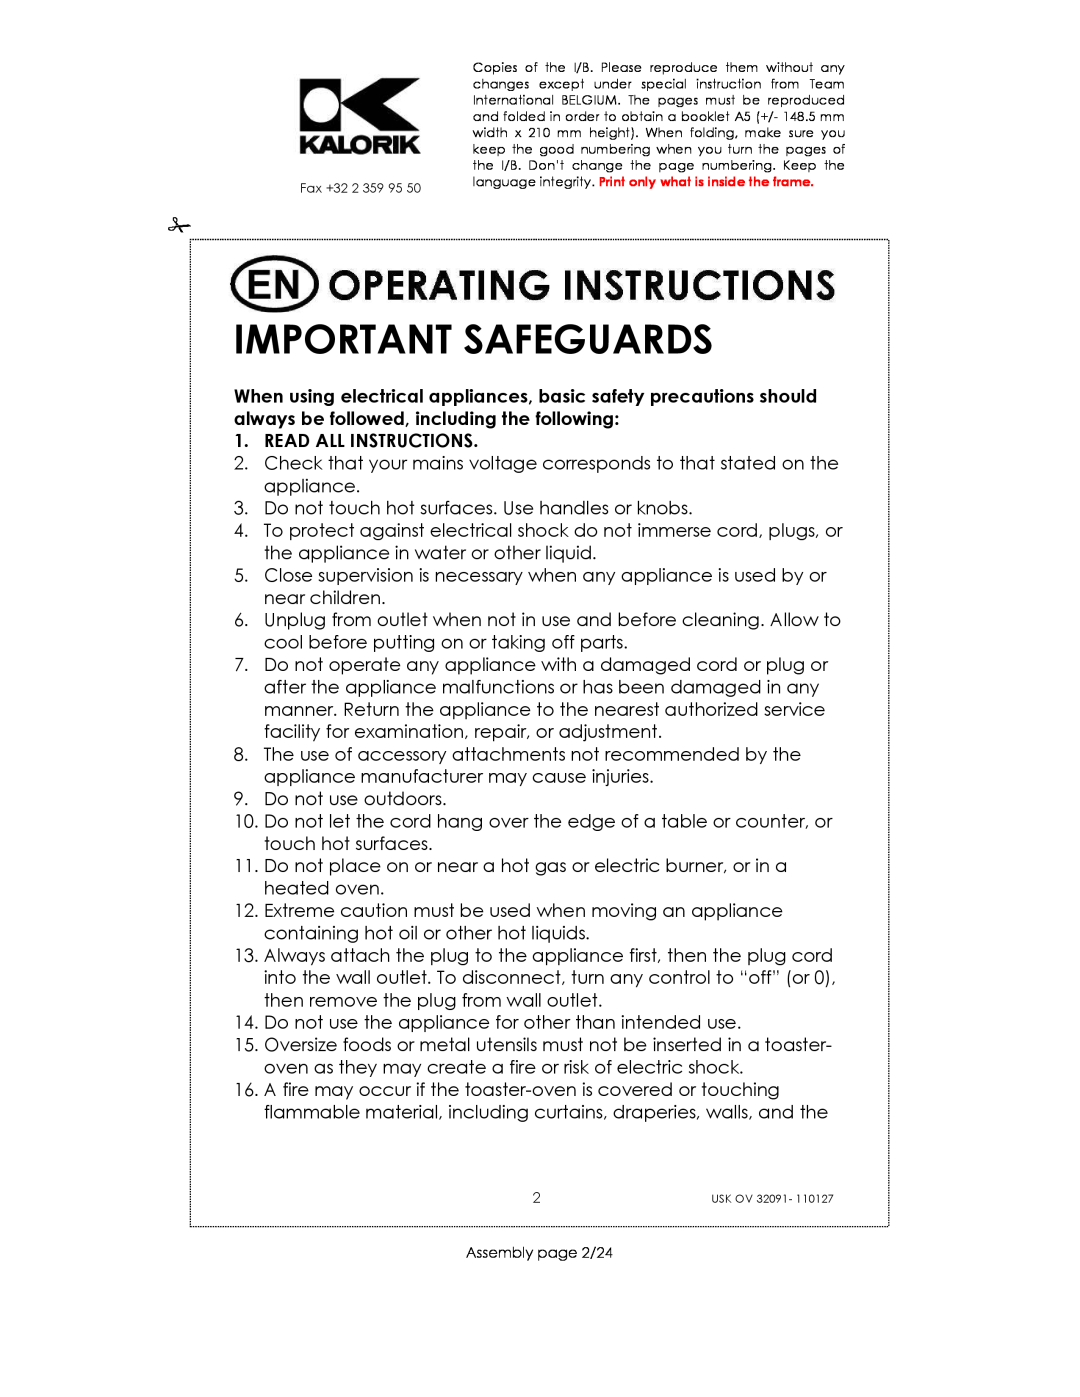 Kalorik USK OV 32091 manual Important Safeguards, Read All Instructions 